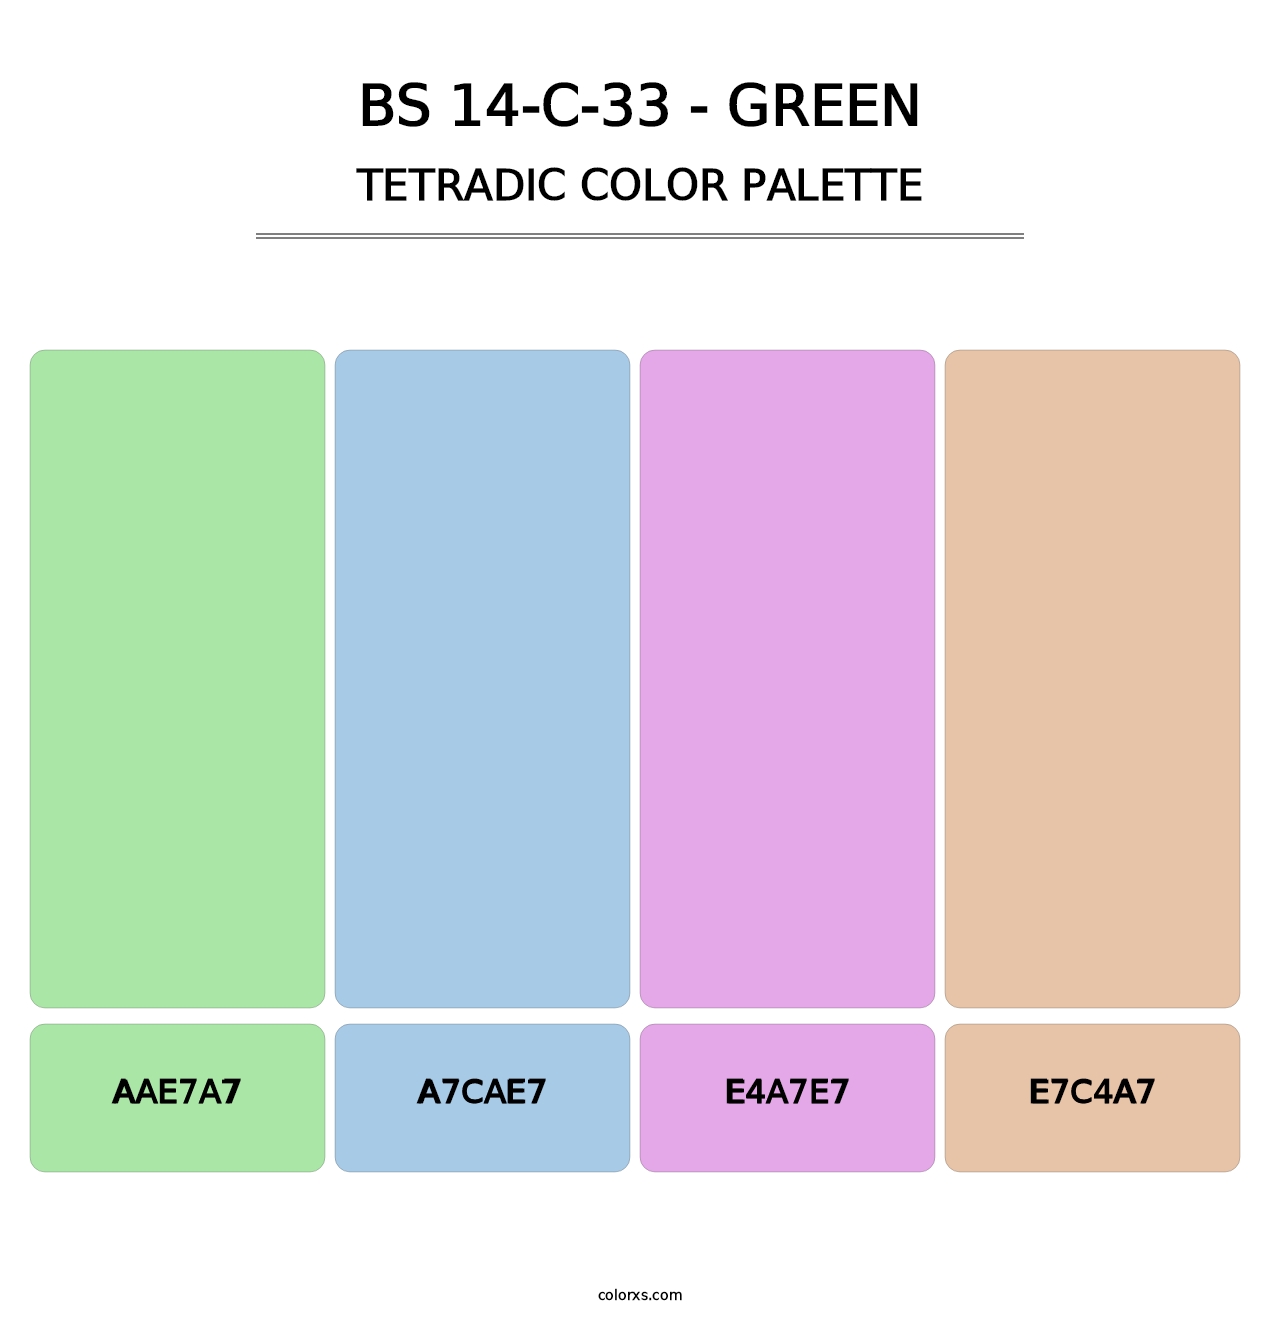 BS 14-C-33 - Green - Tetradic Color Palette